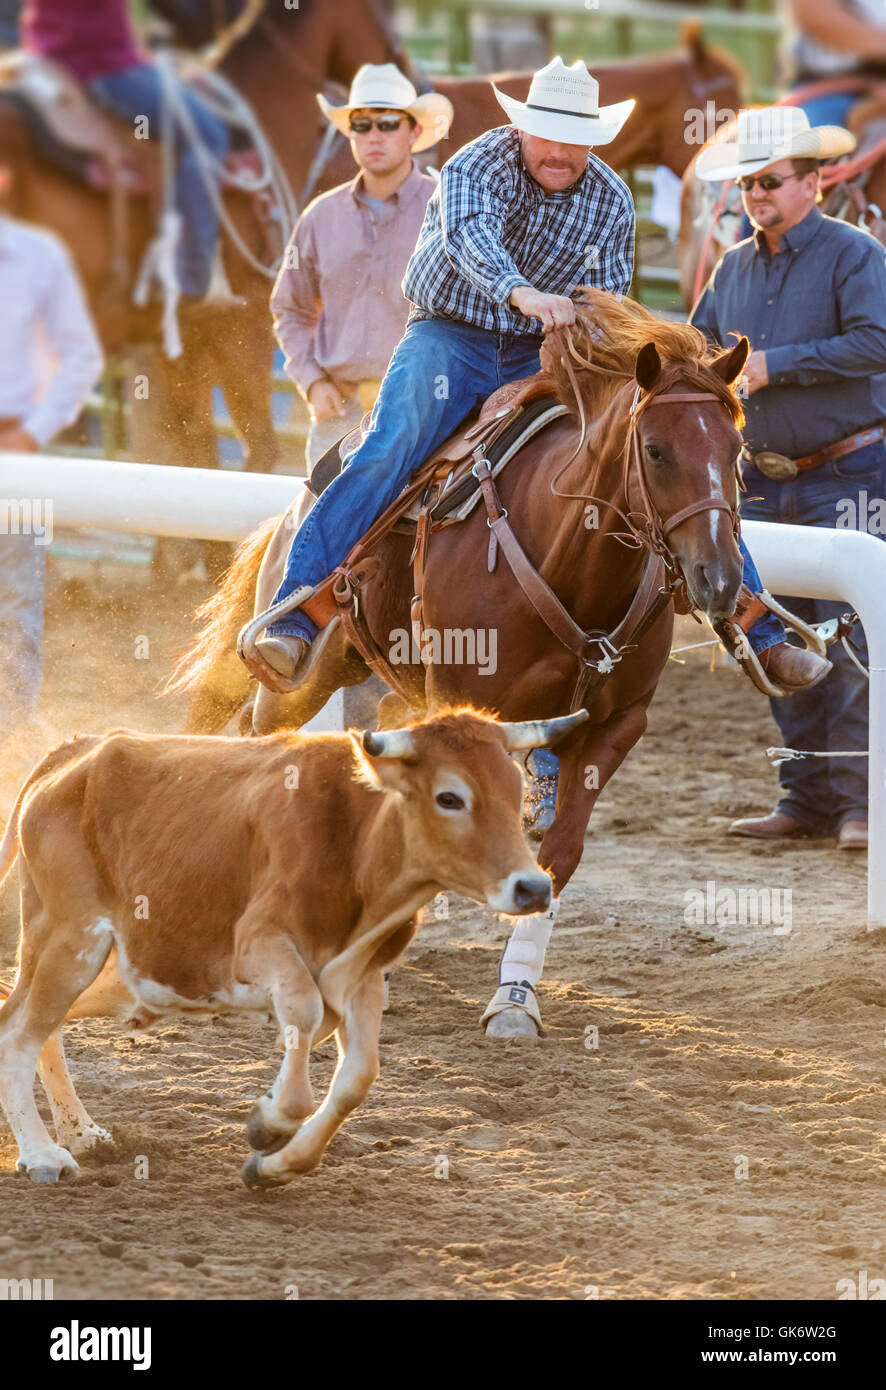 Rodeo Cowboys Reiten mit dir darum konkurrieren in Steer wrestling Event, Chaffee County Fair & Rodeo, Salida, Colorado, USA Stockfoto